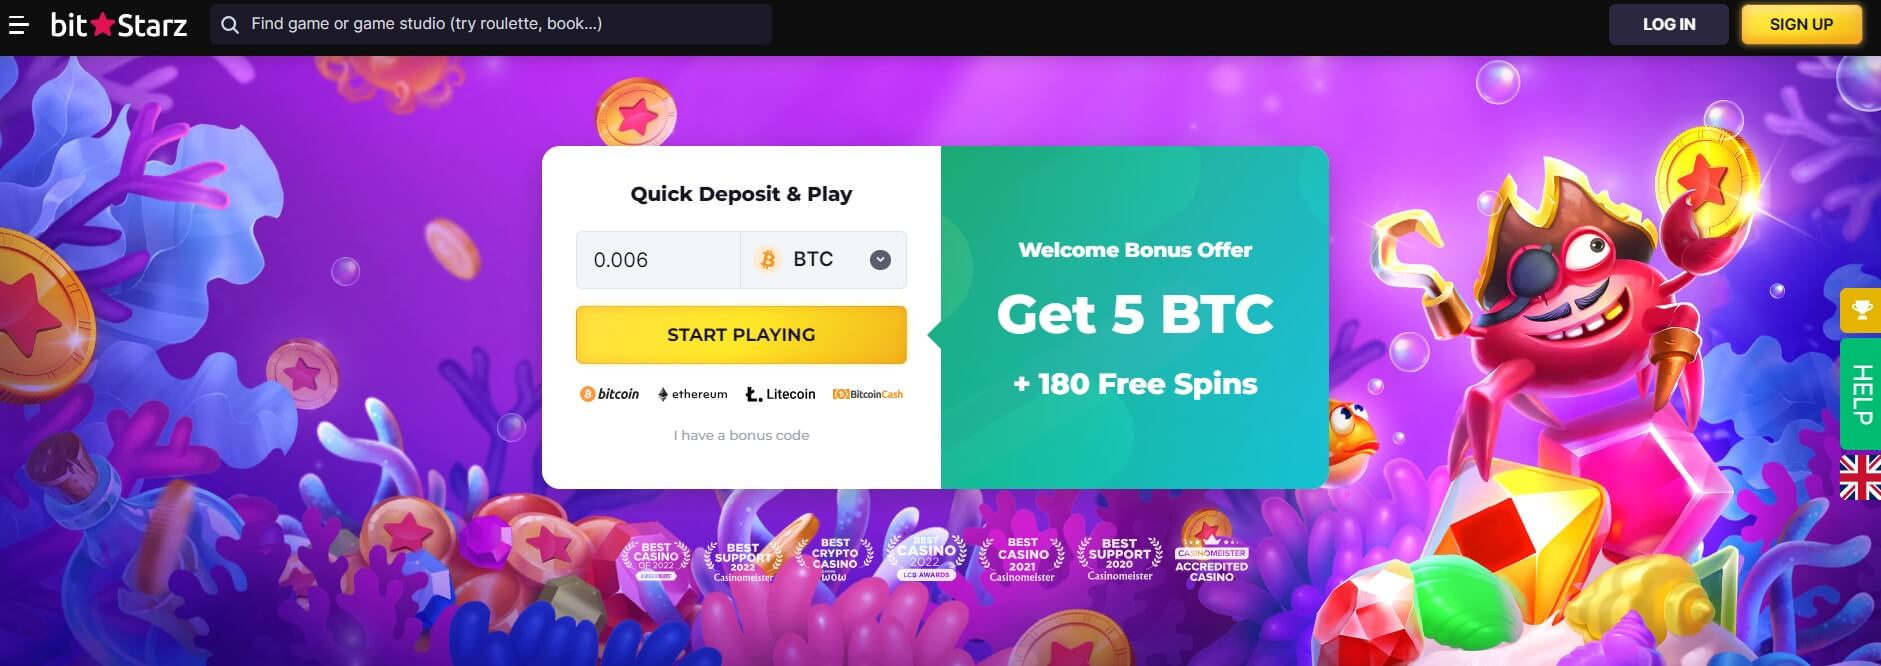 bitstarz casino for bitcoin